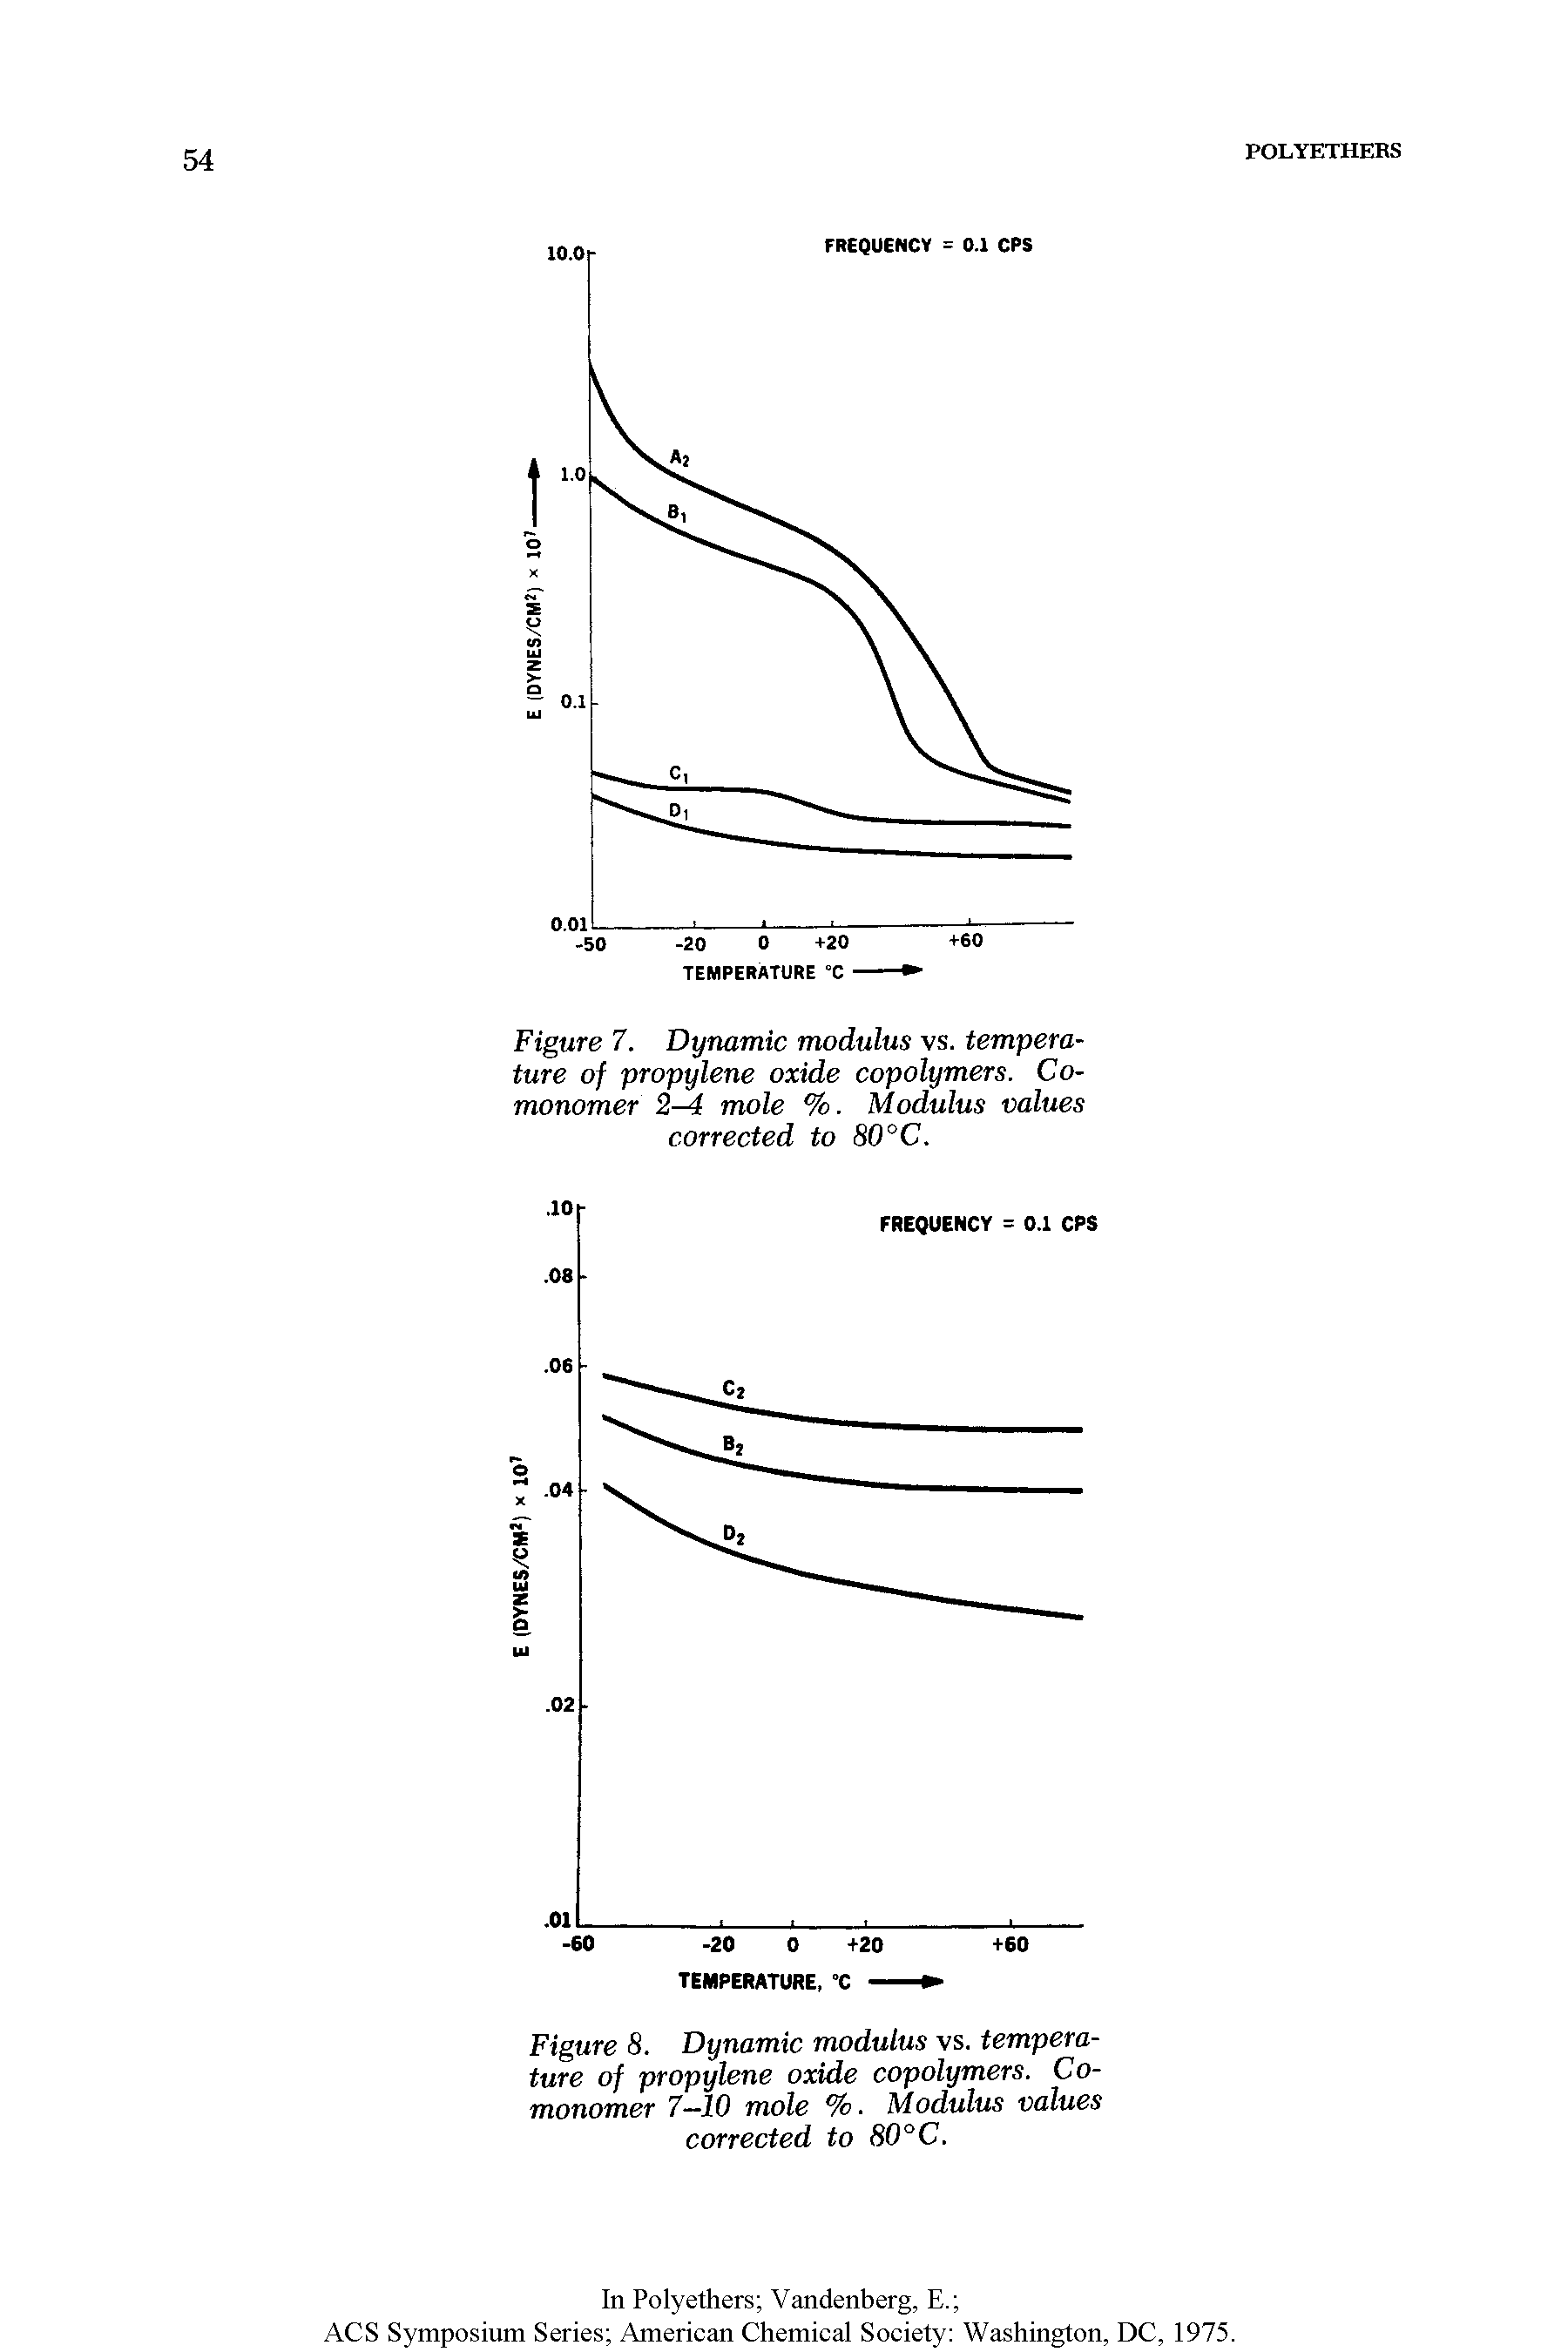 Figure 7. Dynamic modulus vs. temperature of propylene oxide copolymers. Comonomer 2-4 mole %. Modulus values corrected to 80°C.